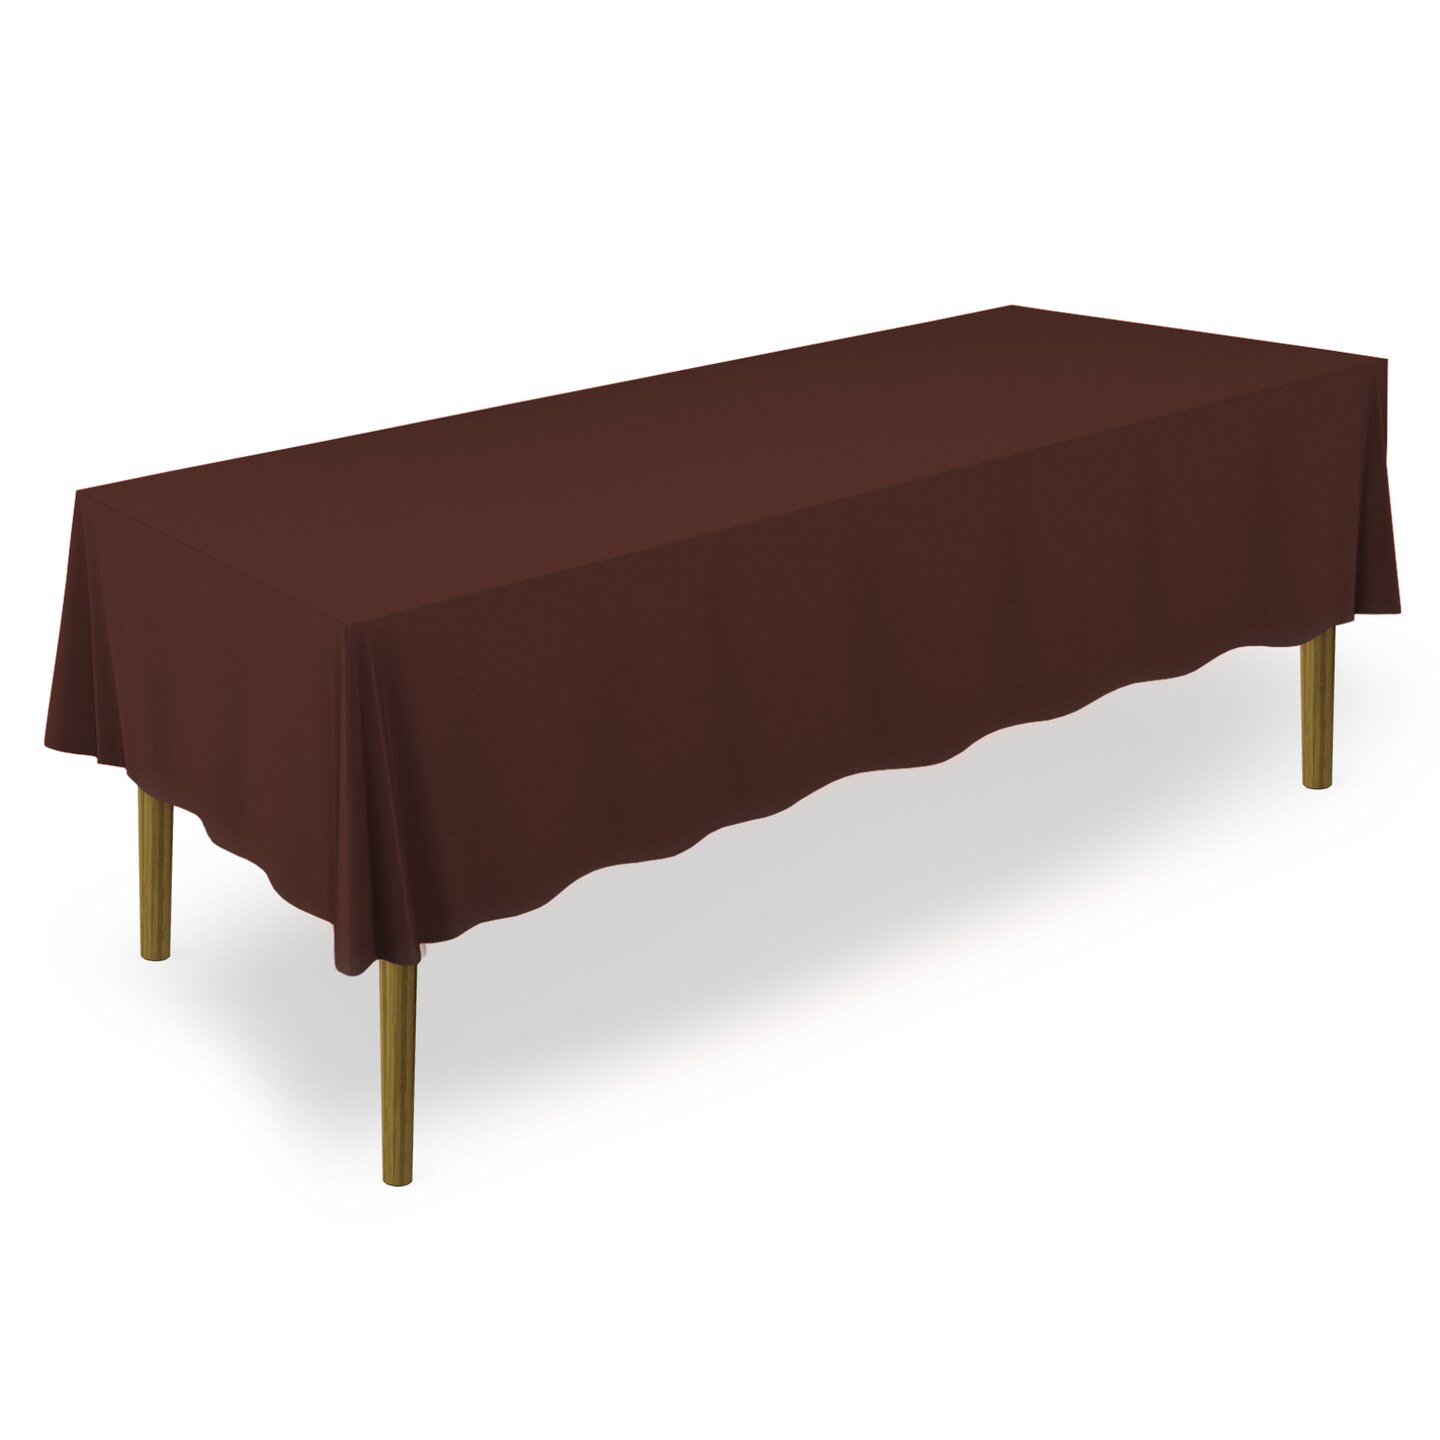 Lann&#x27;s Linens - 10 Premium Tablecloths for Wedding / Banquet / Restaurant - Rectangular Polyester Fabric Table Cloths